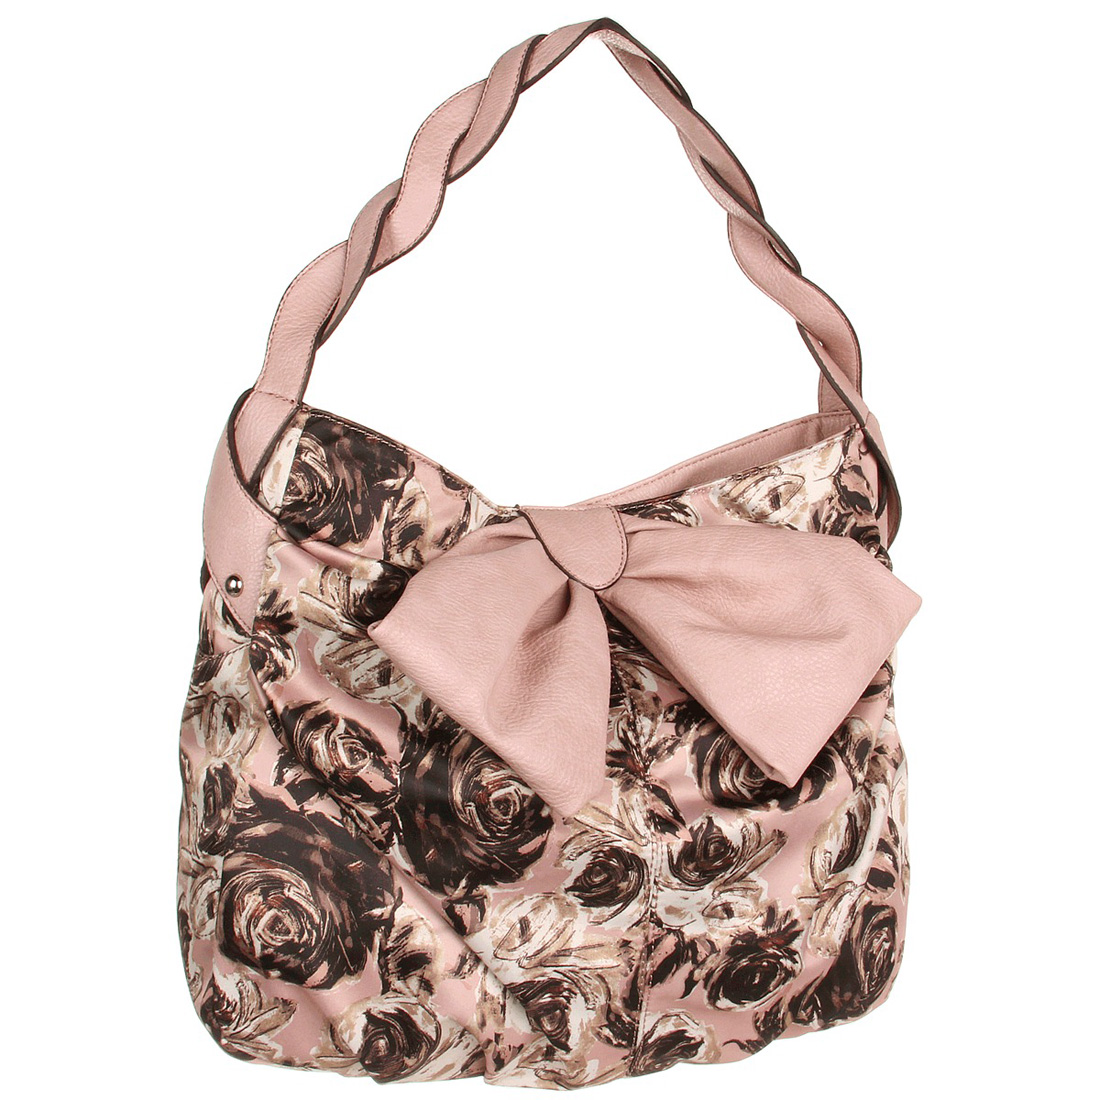 Jessica Simpson Lotus JS5081 Illisa Hobo Bag Floral | eBay